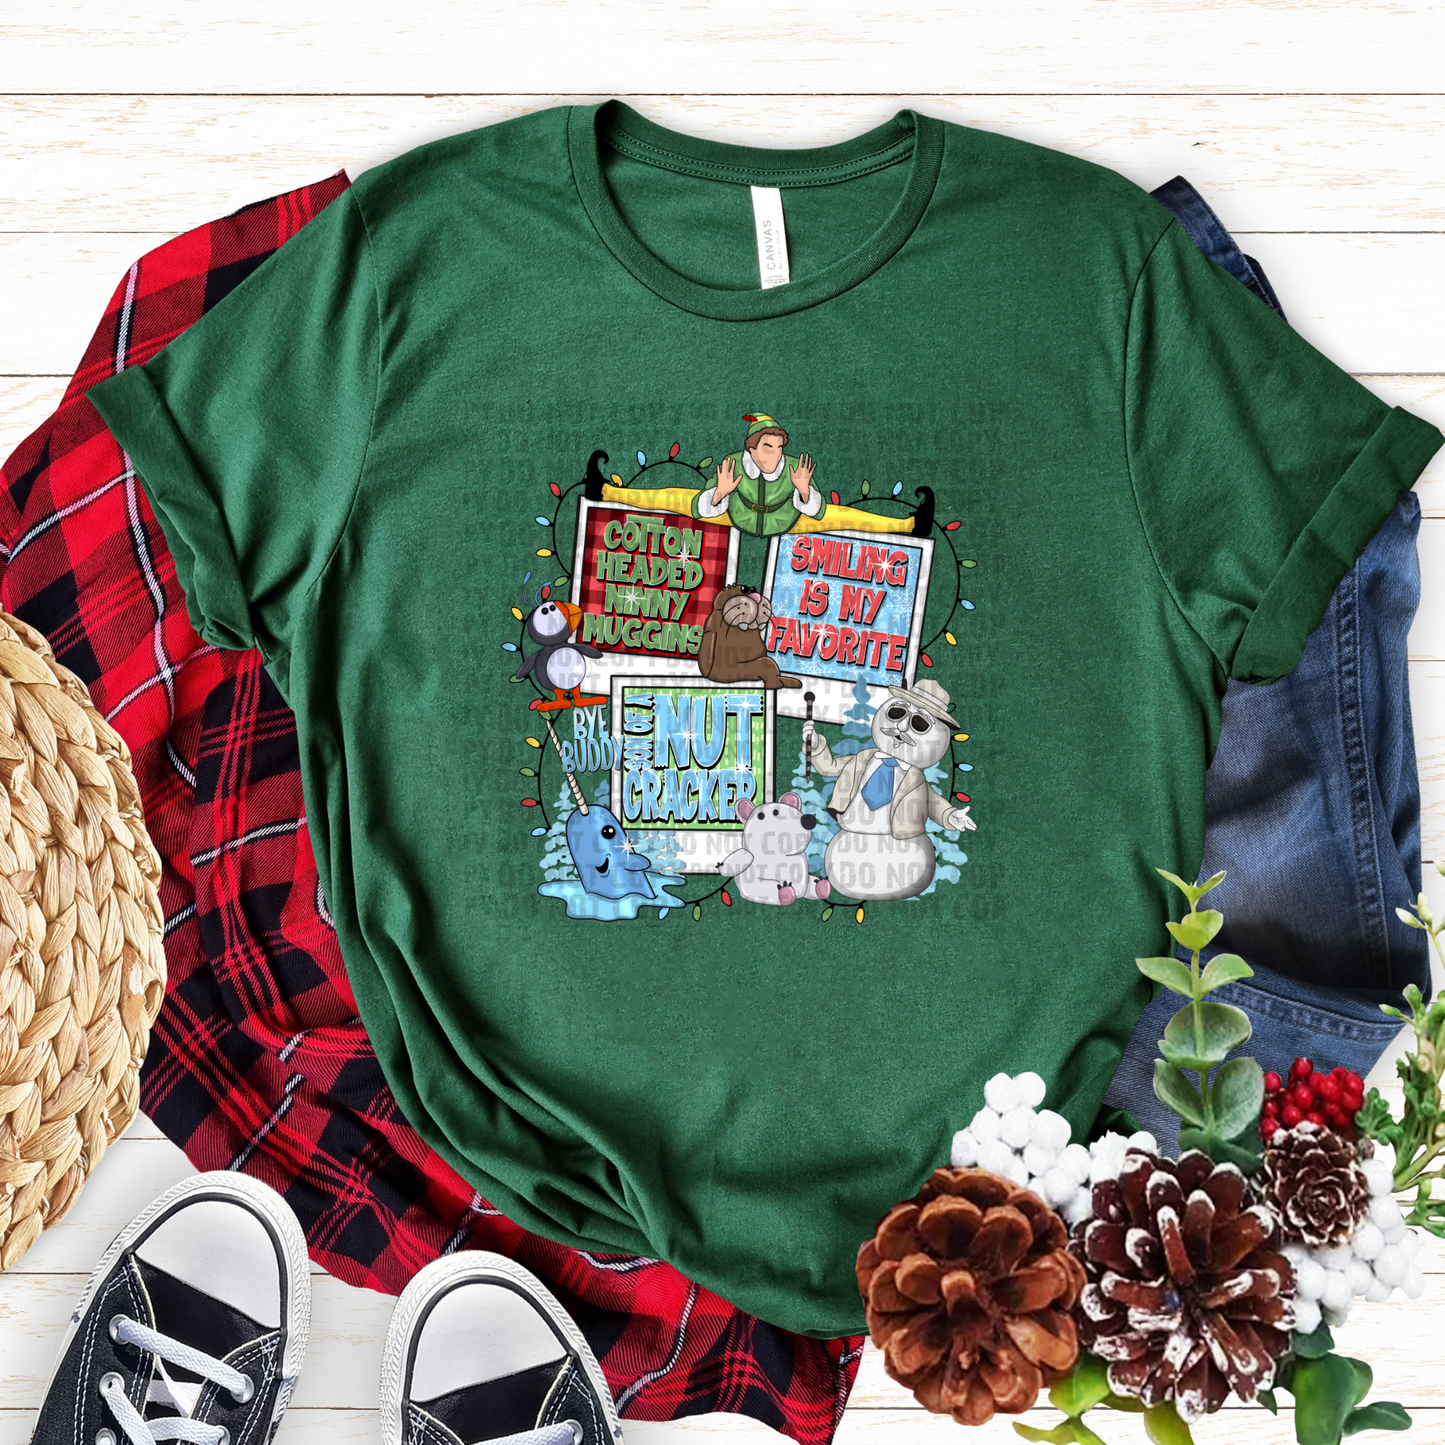 Son of a Nutcracker T-Shirt | Trendy Christmas Movie Shirt | Fast Shipping | Super Soft Shirts for Women/Kid's